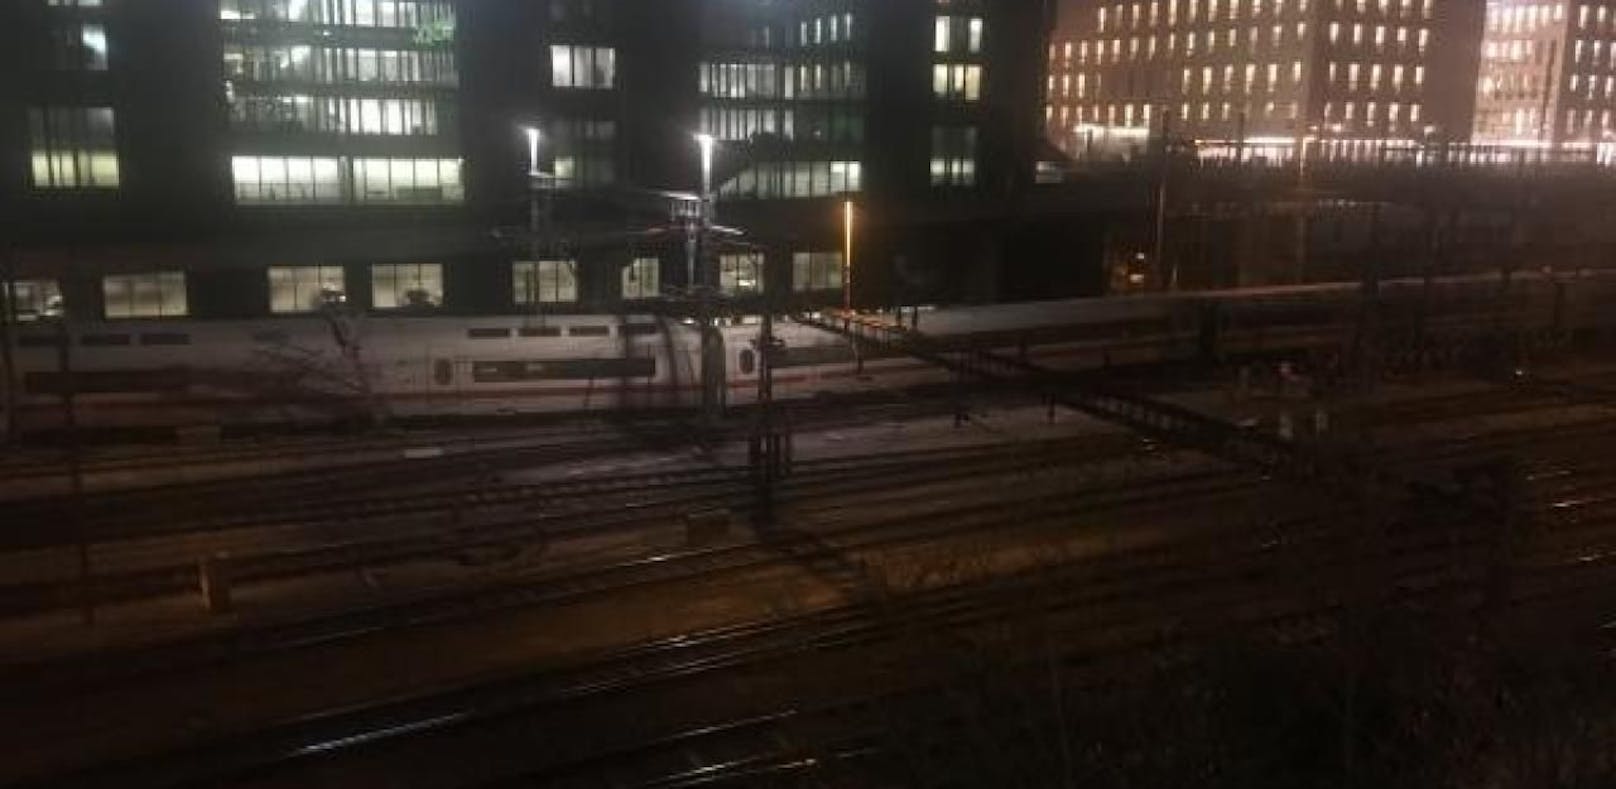 ICE-Zug am Bahnhof Basel entgleist